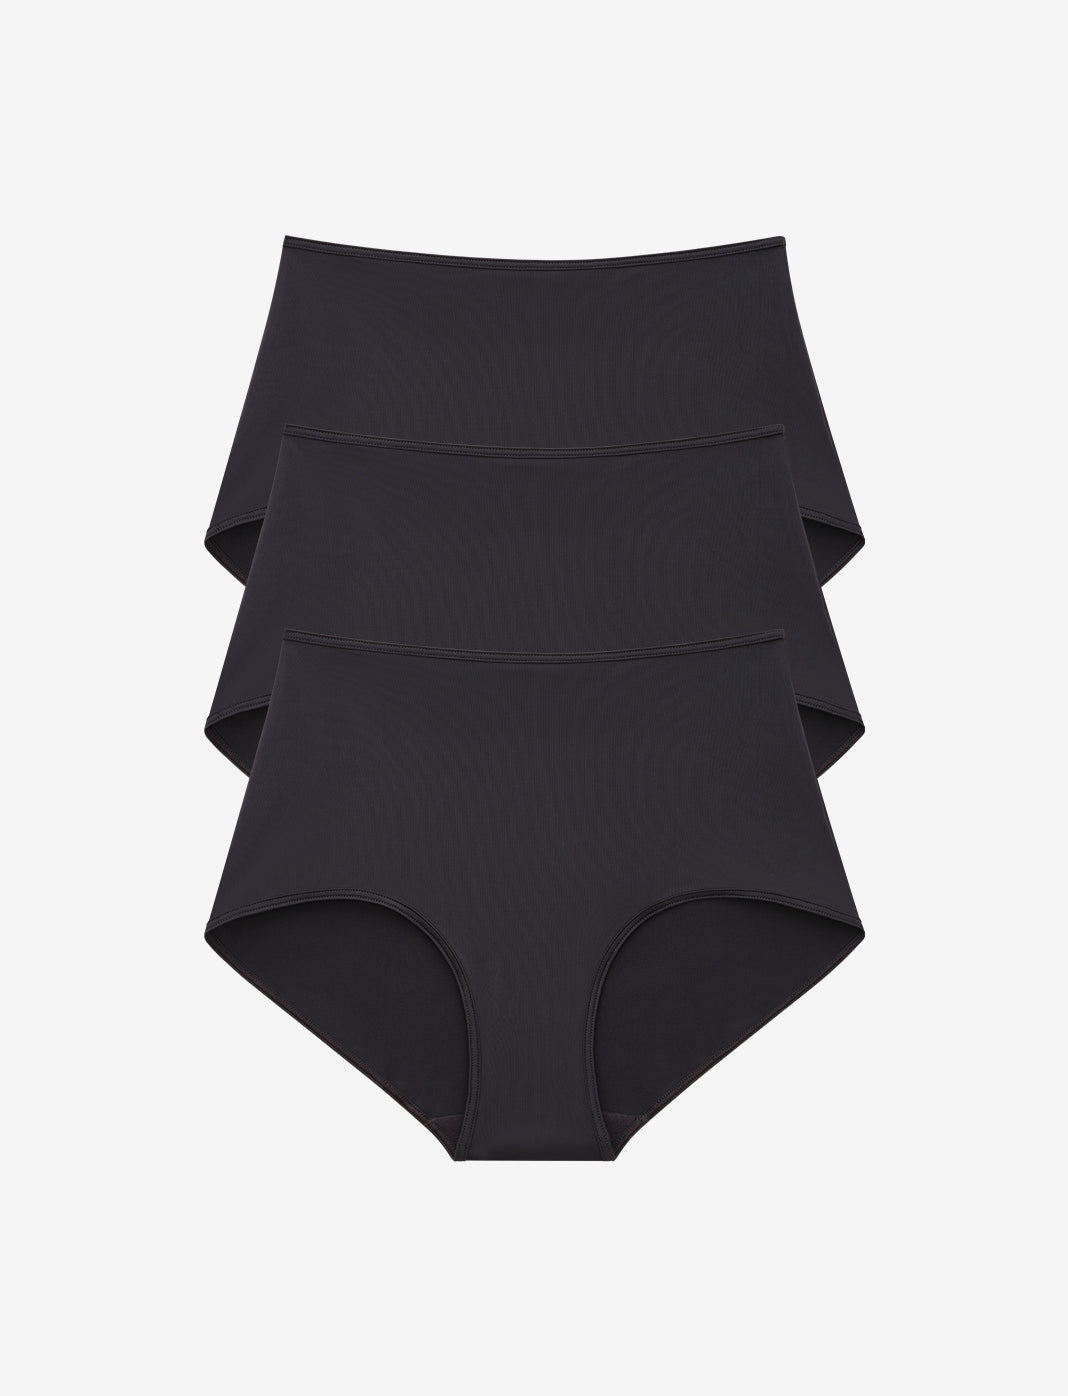 Women's Underwear Classic Nylon Panties Full Cut Carole Briefs, 3-Pack